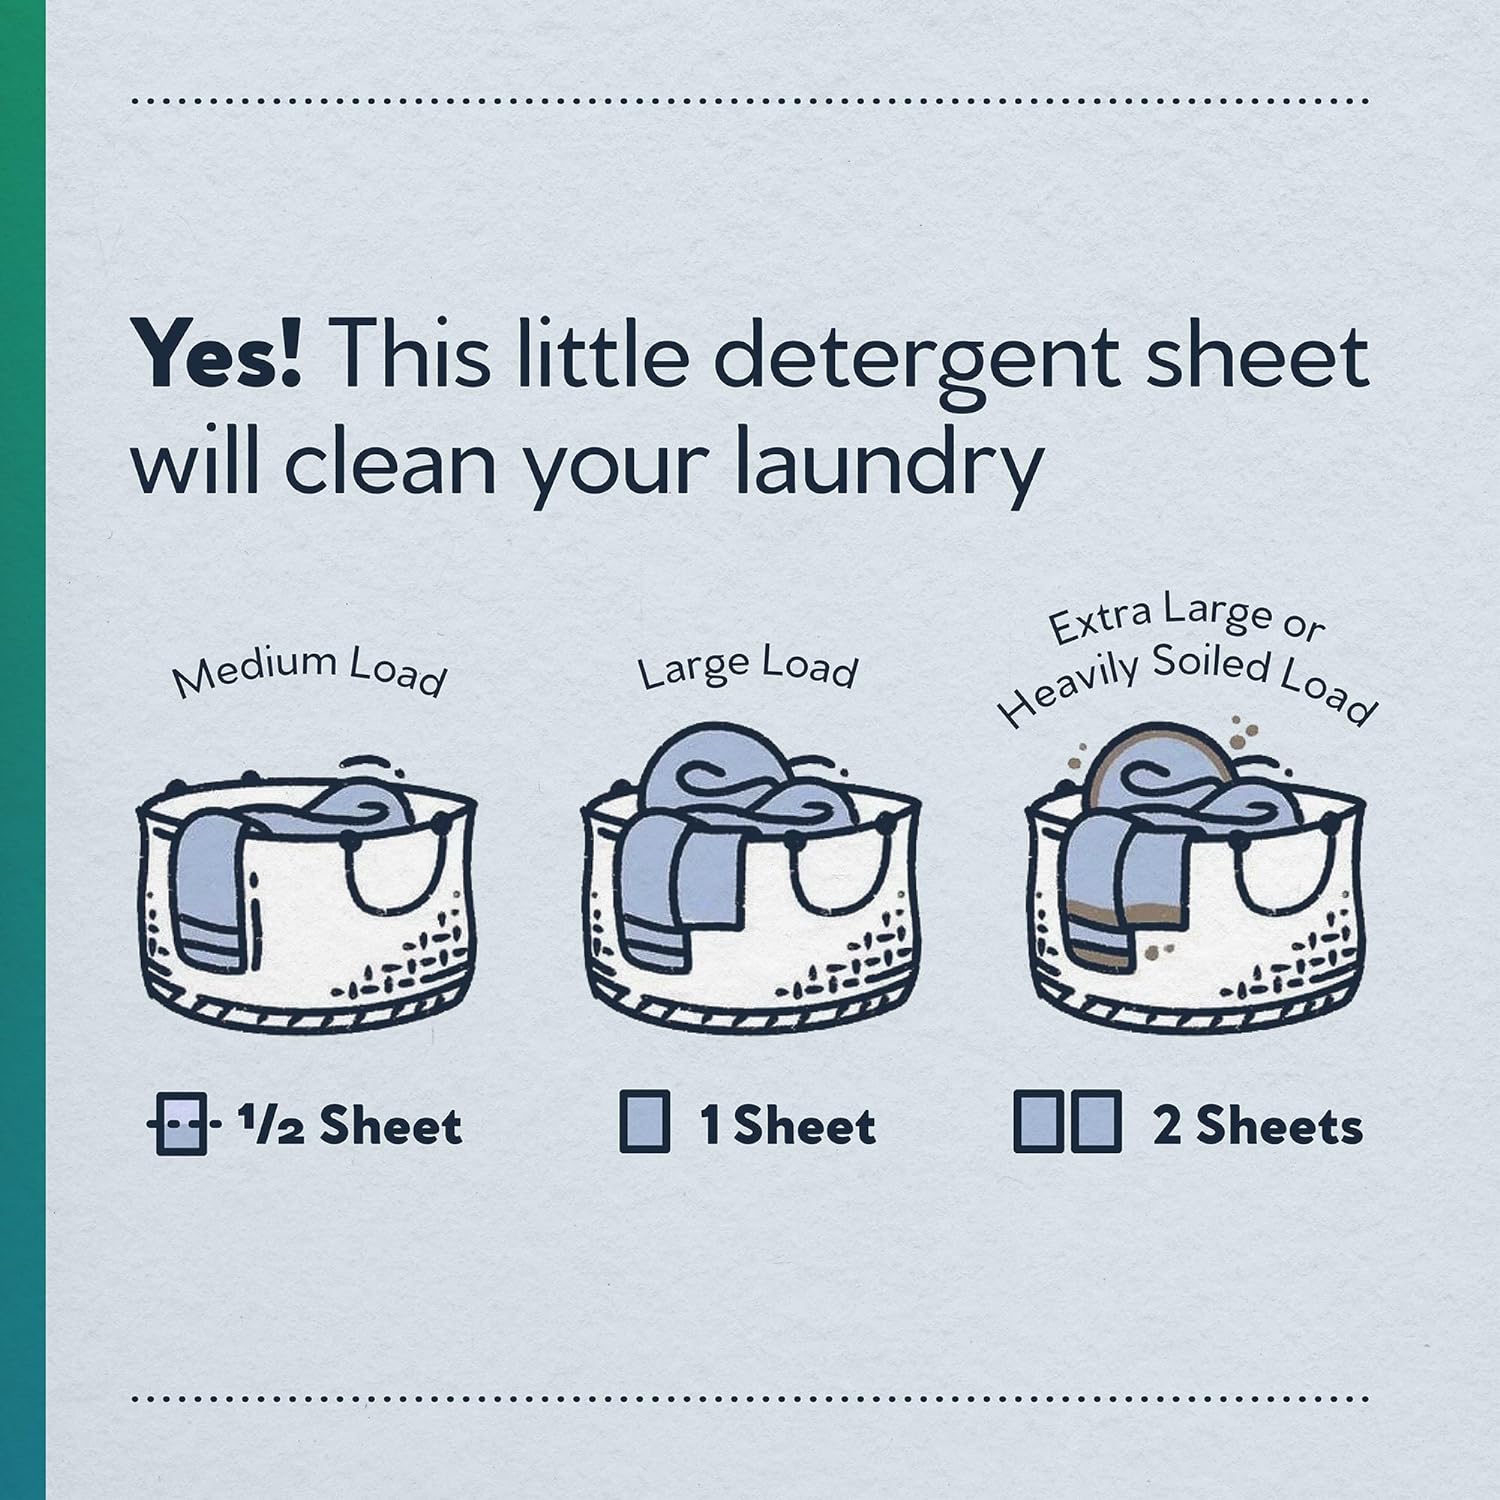 Earth Breeze Laundry Detergent Sheets - Fresh Scent - No Plastic Jug (60 Loads) 30 Sheets